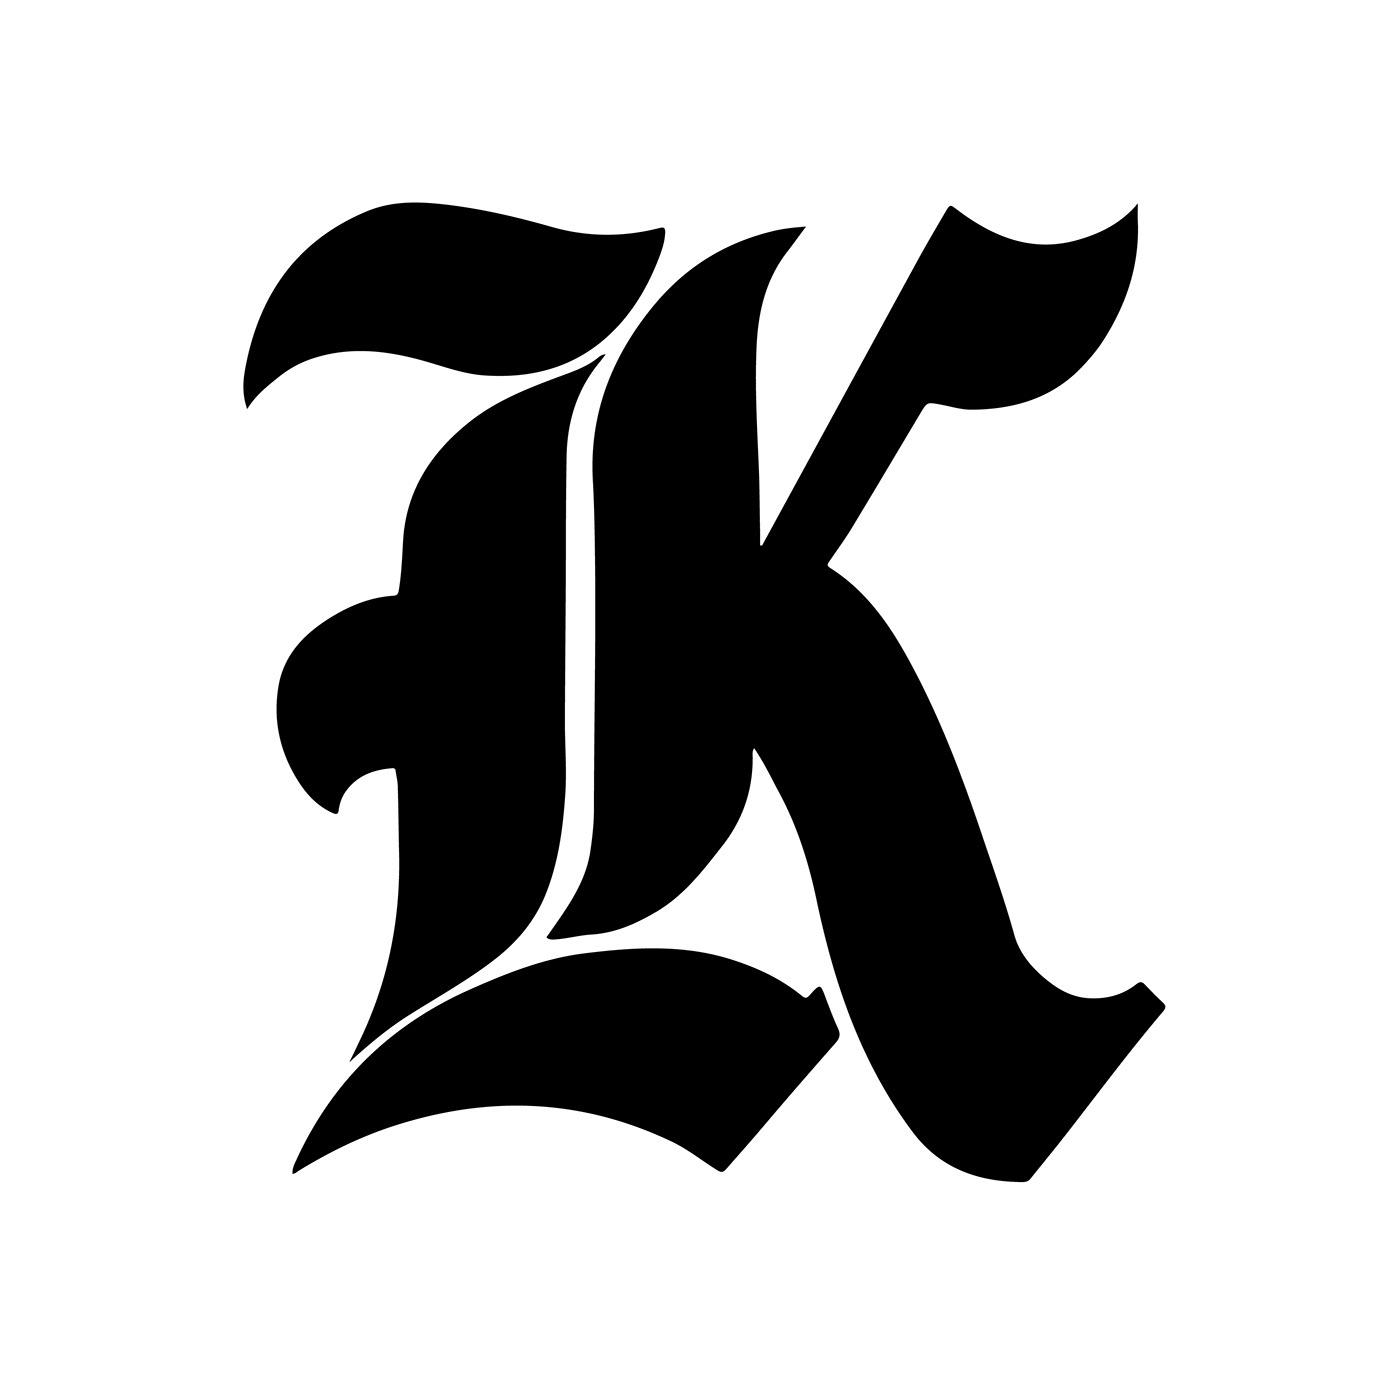 Best old english. Надпись LK. Красивая буква к для логотипа. Логотип с буквой l. Логотип ЛК.